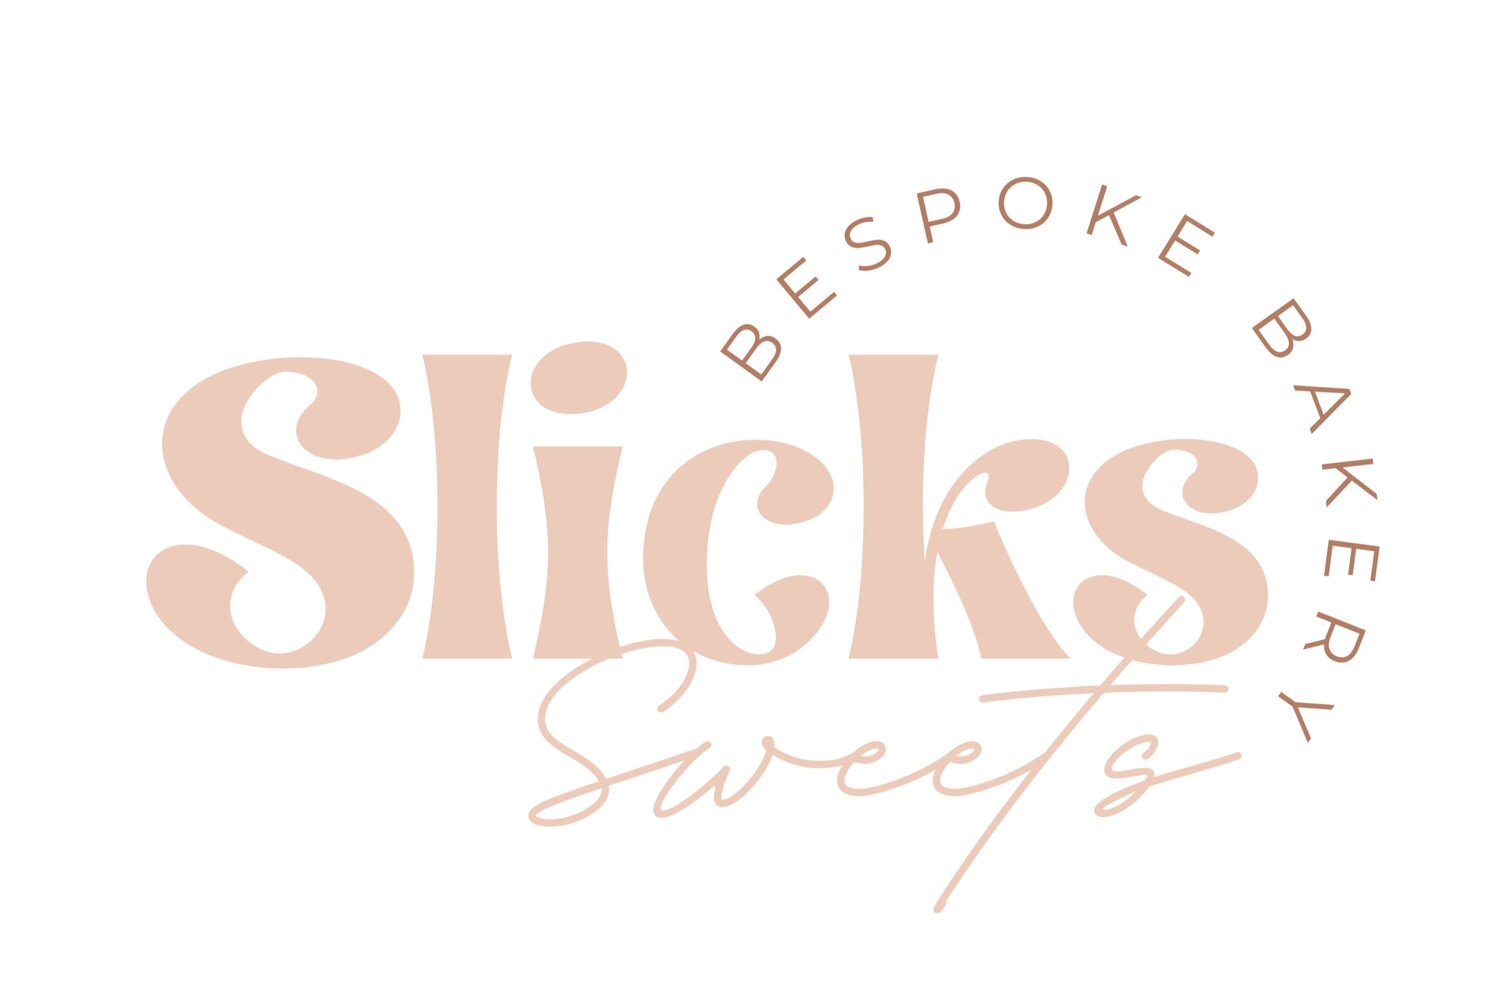 Slicks Sweets